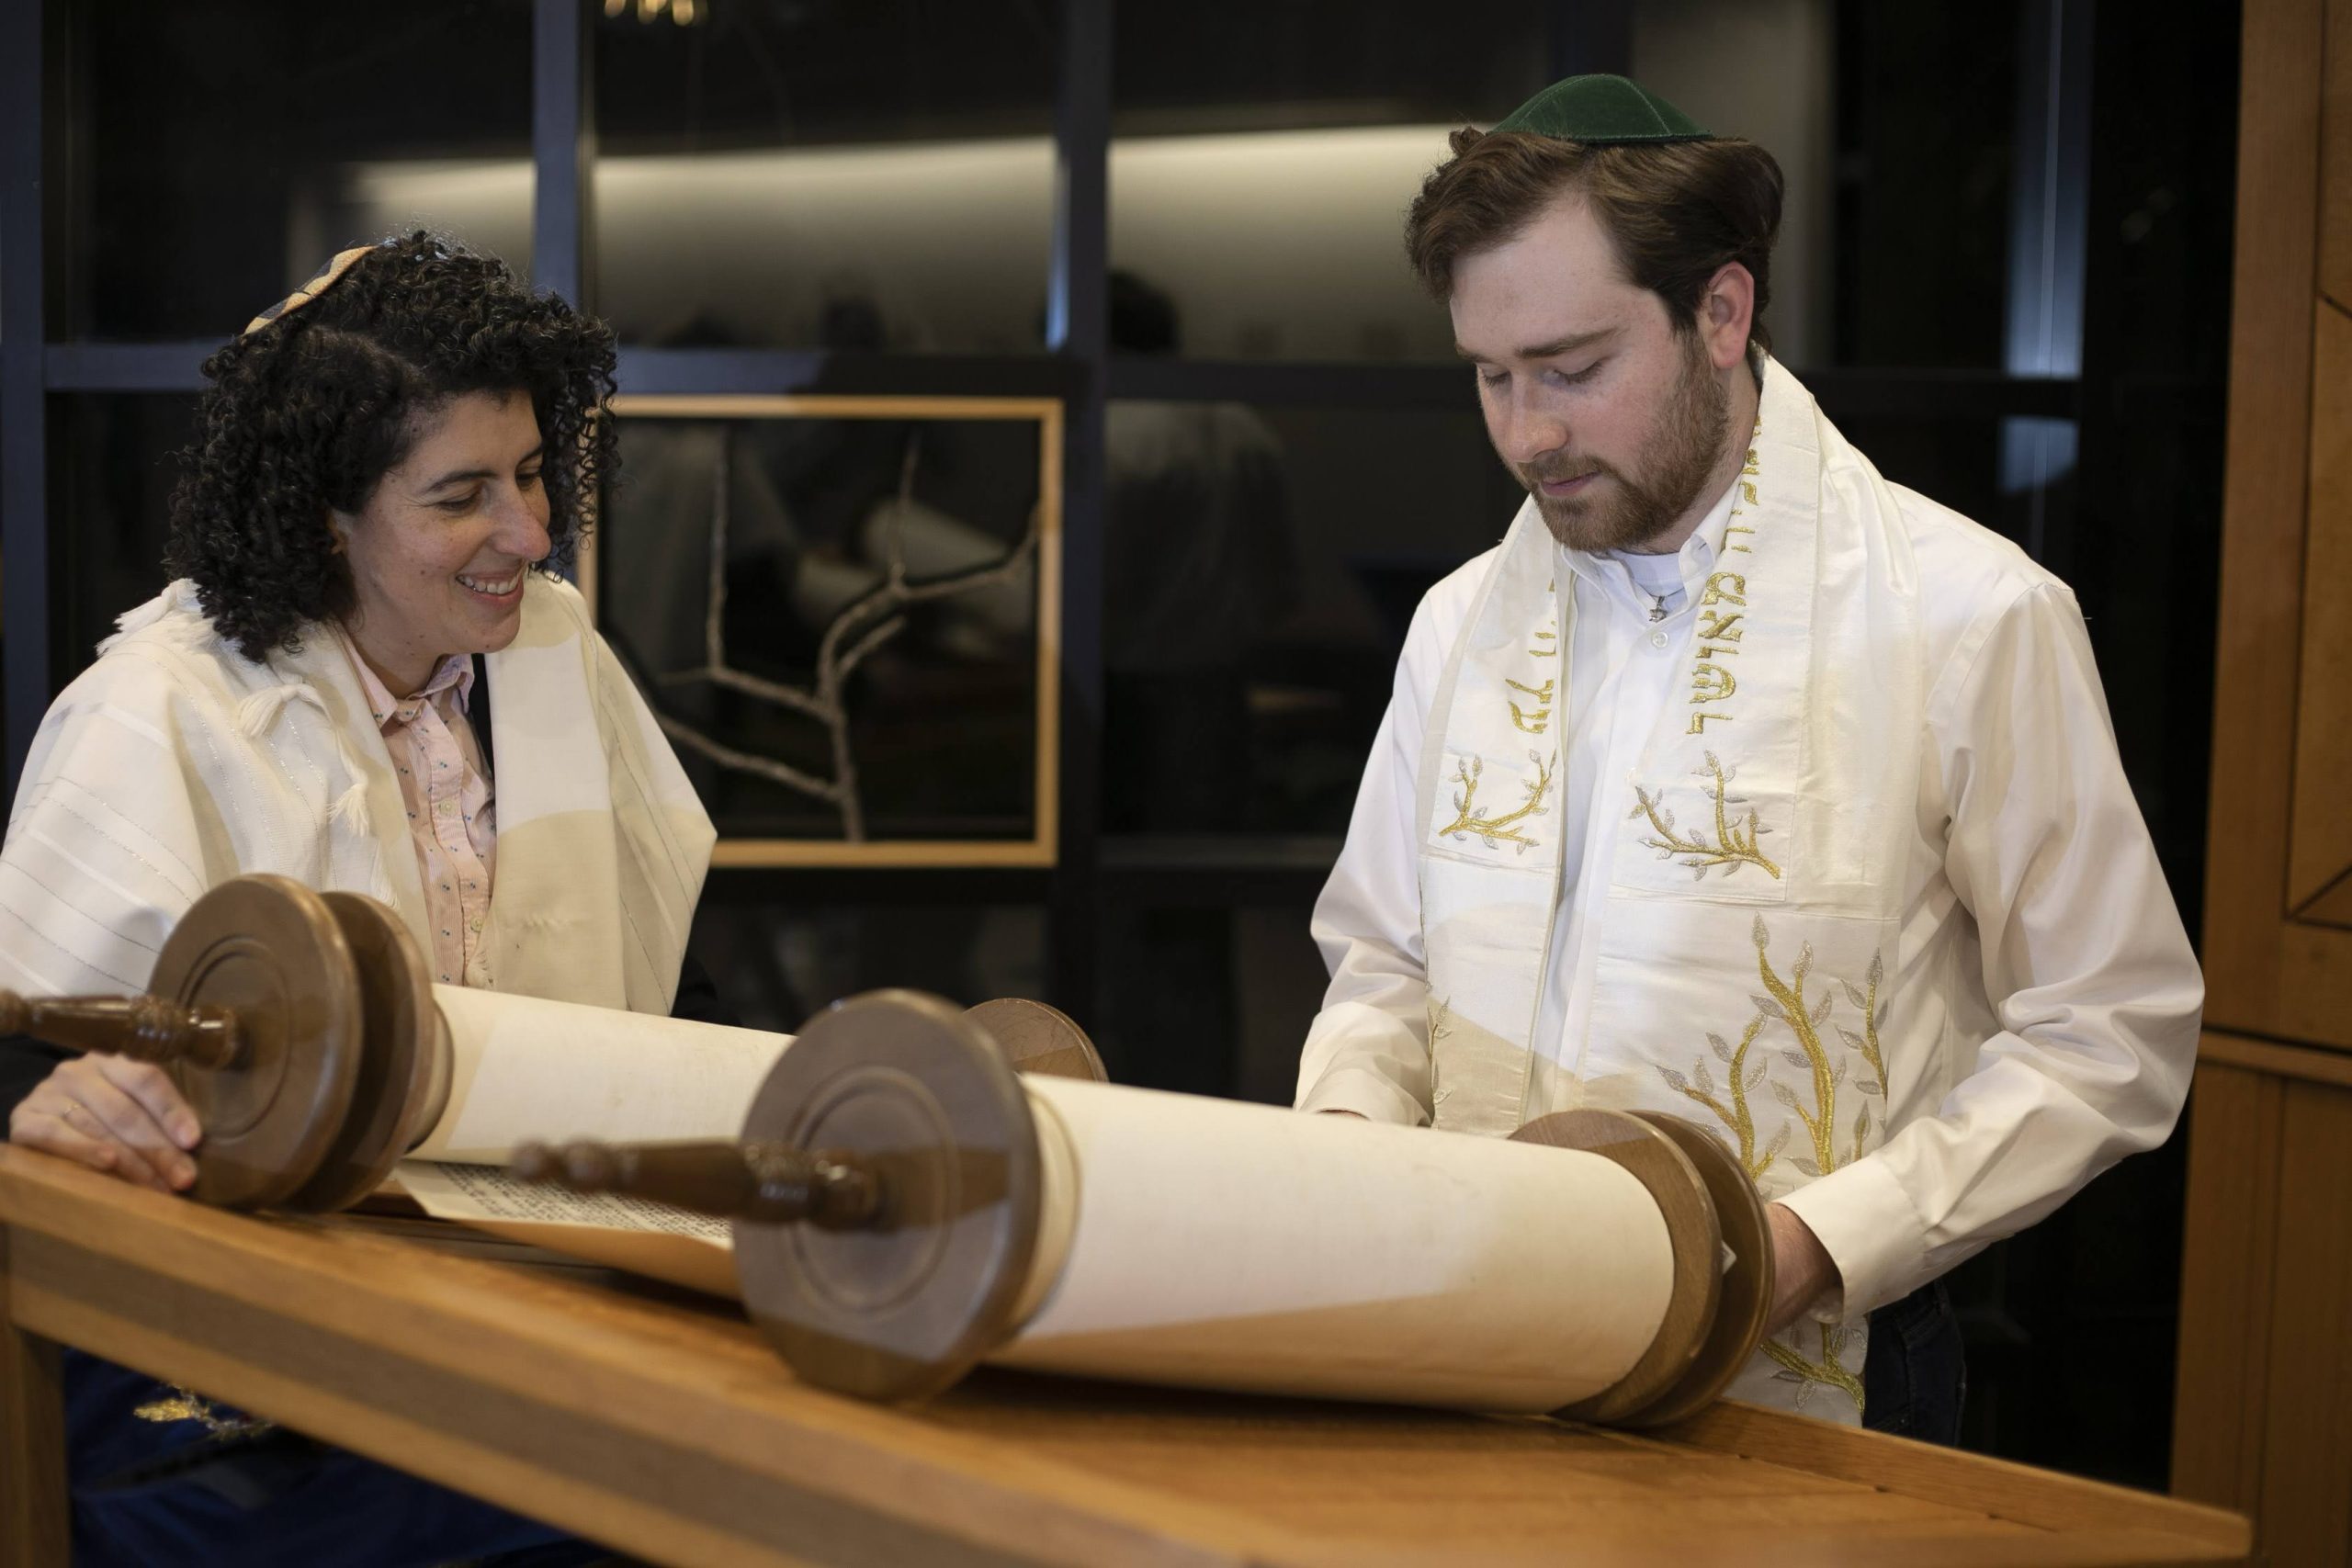 Rabbi and Jewish Student read the Torah